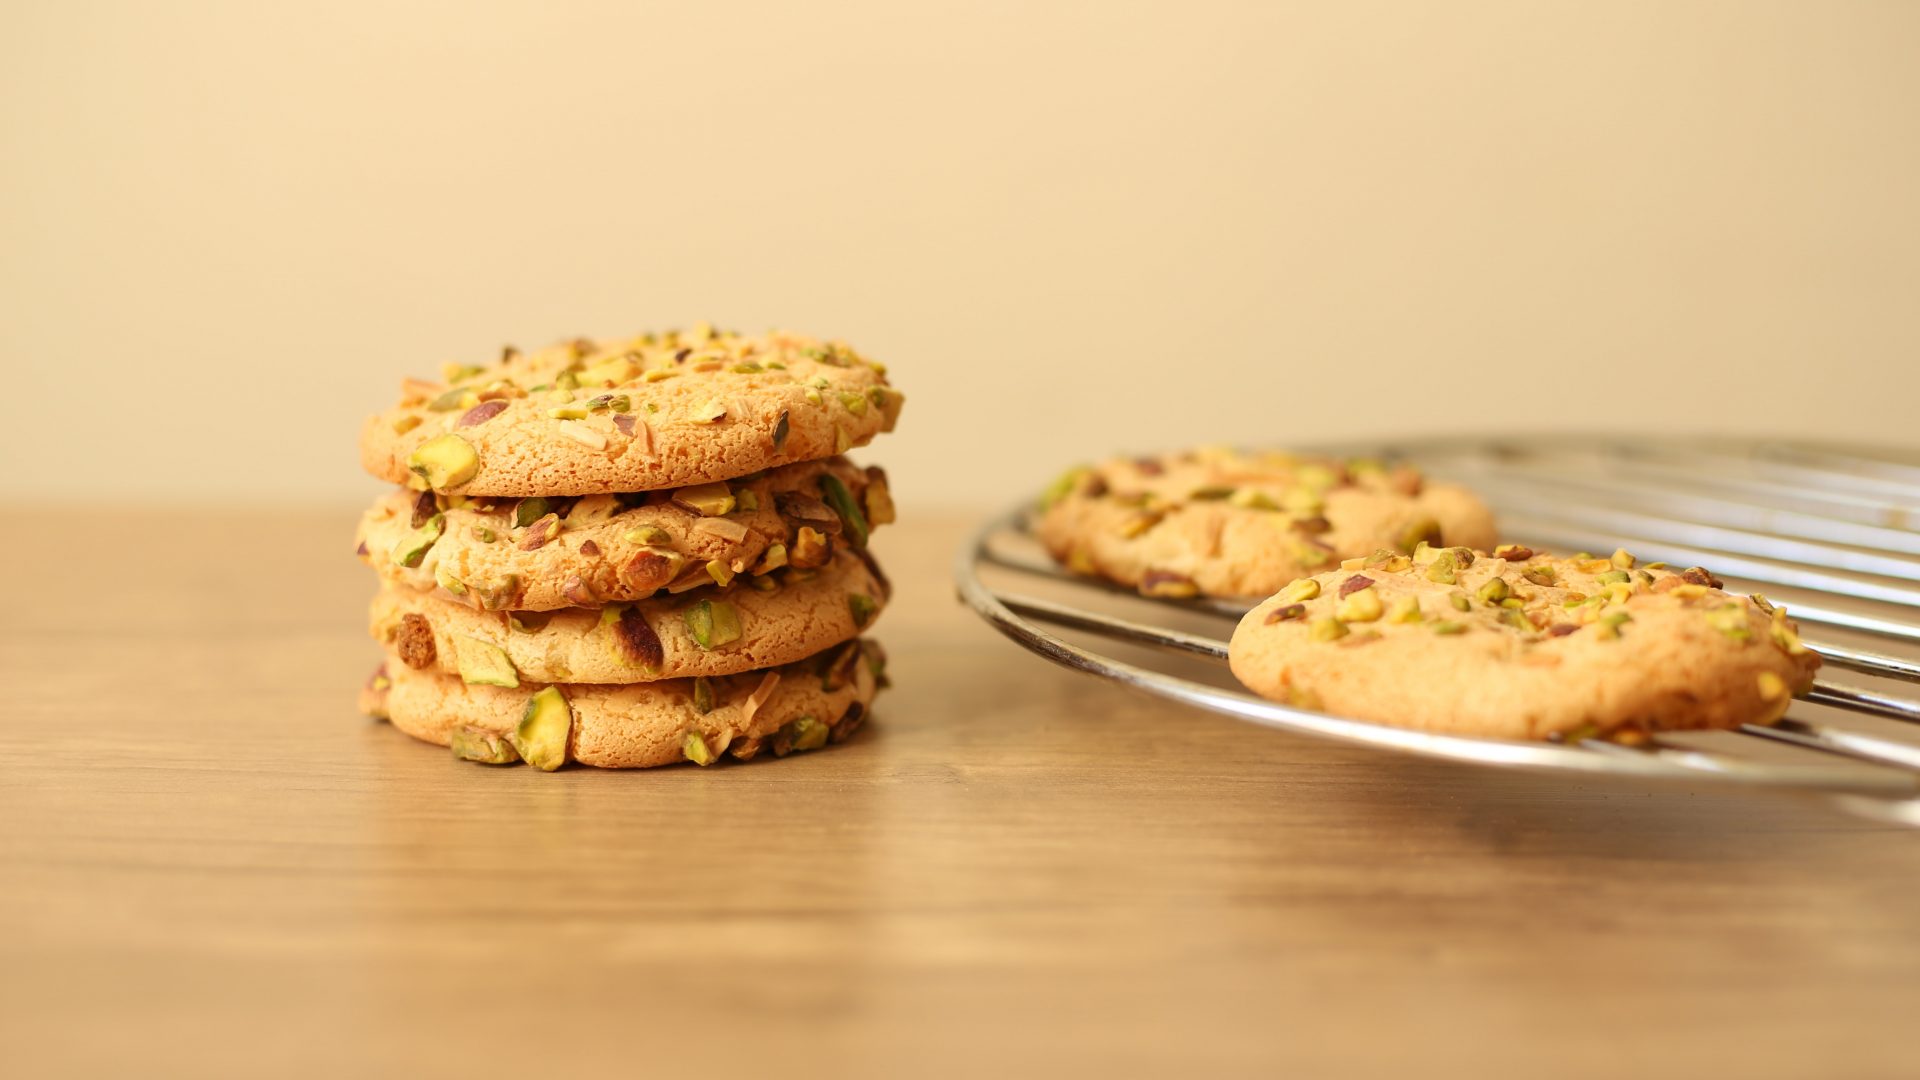 vegan cookies on a table